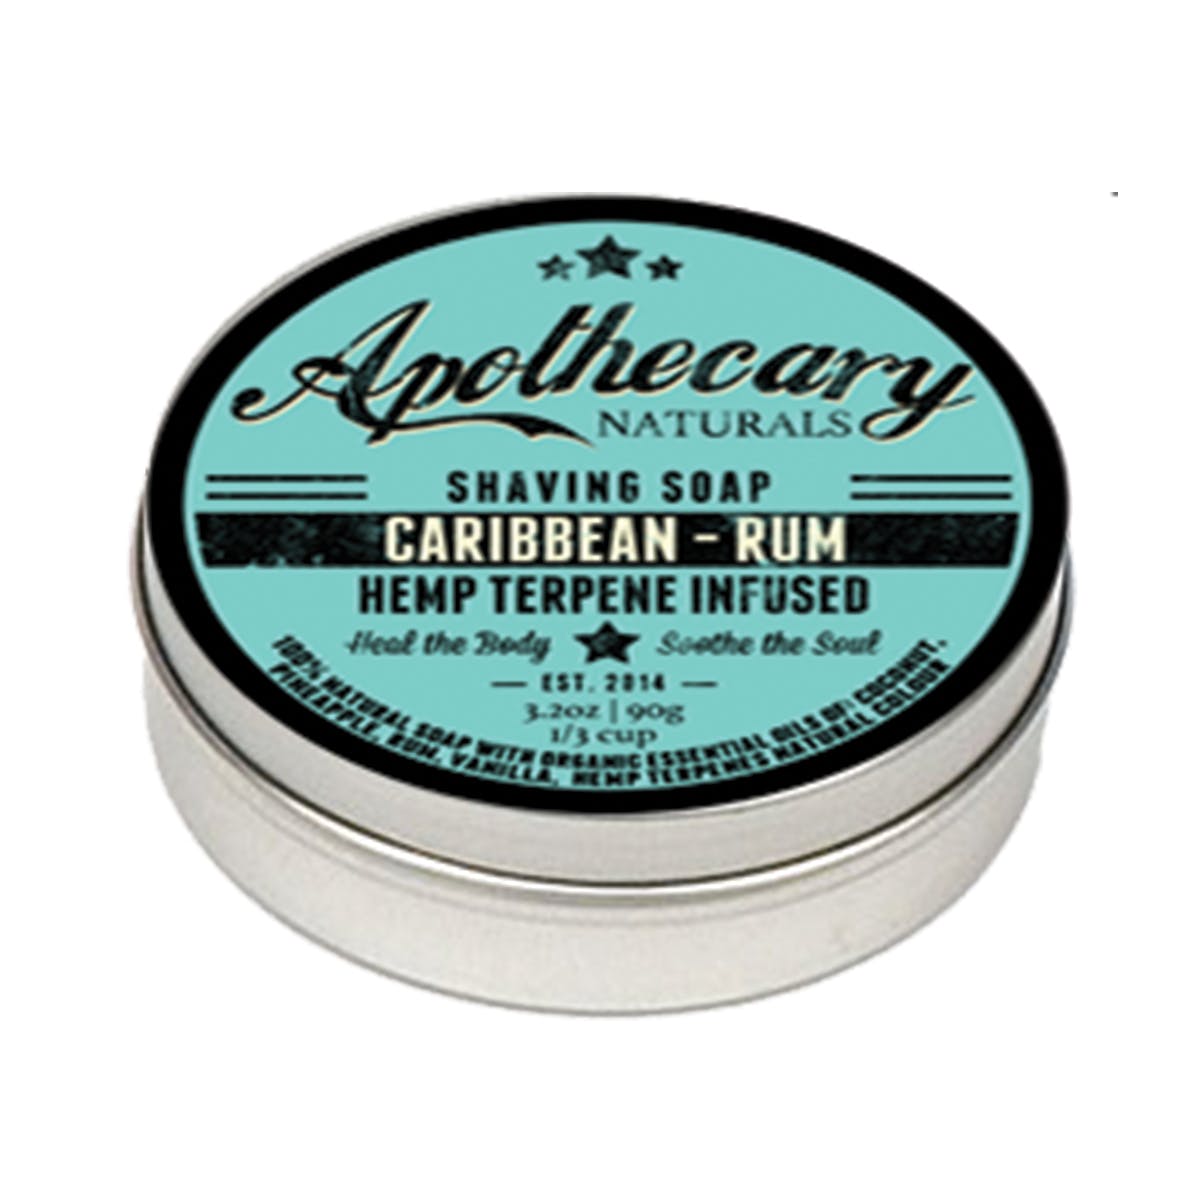 Caribbean-Rum Hemp Shaving Soap